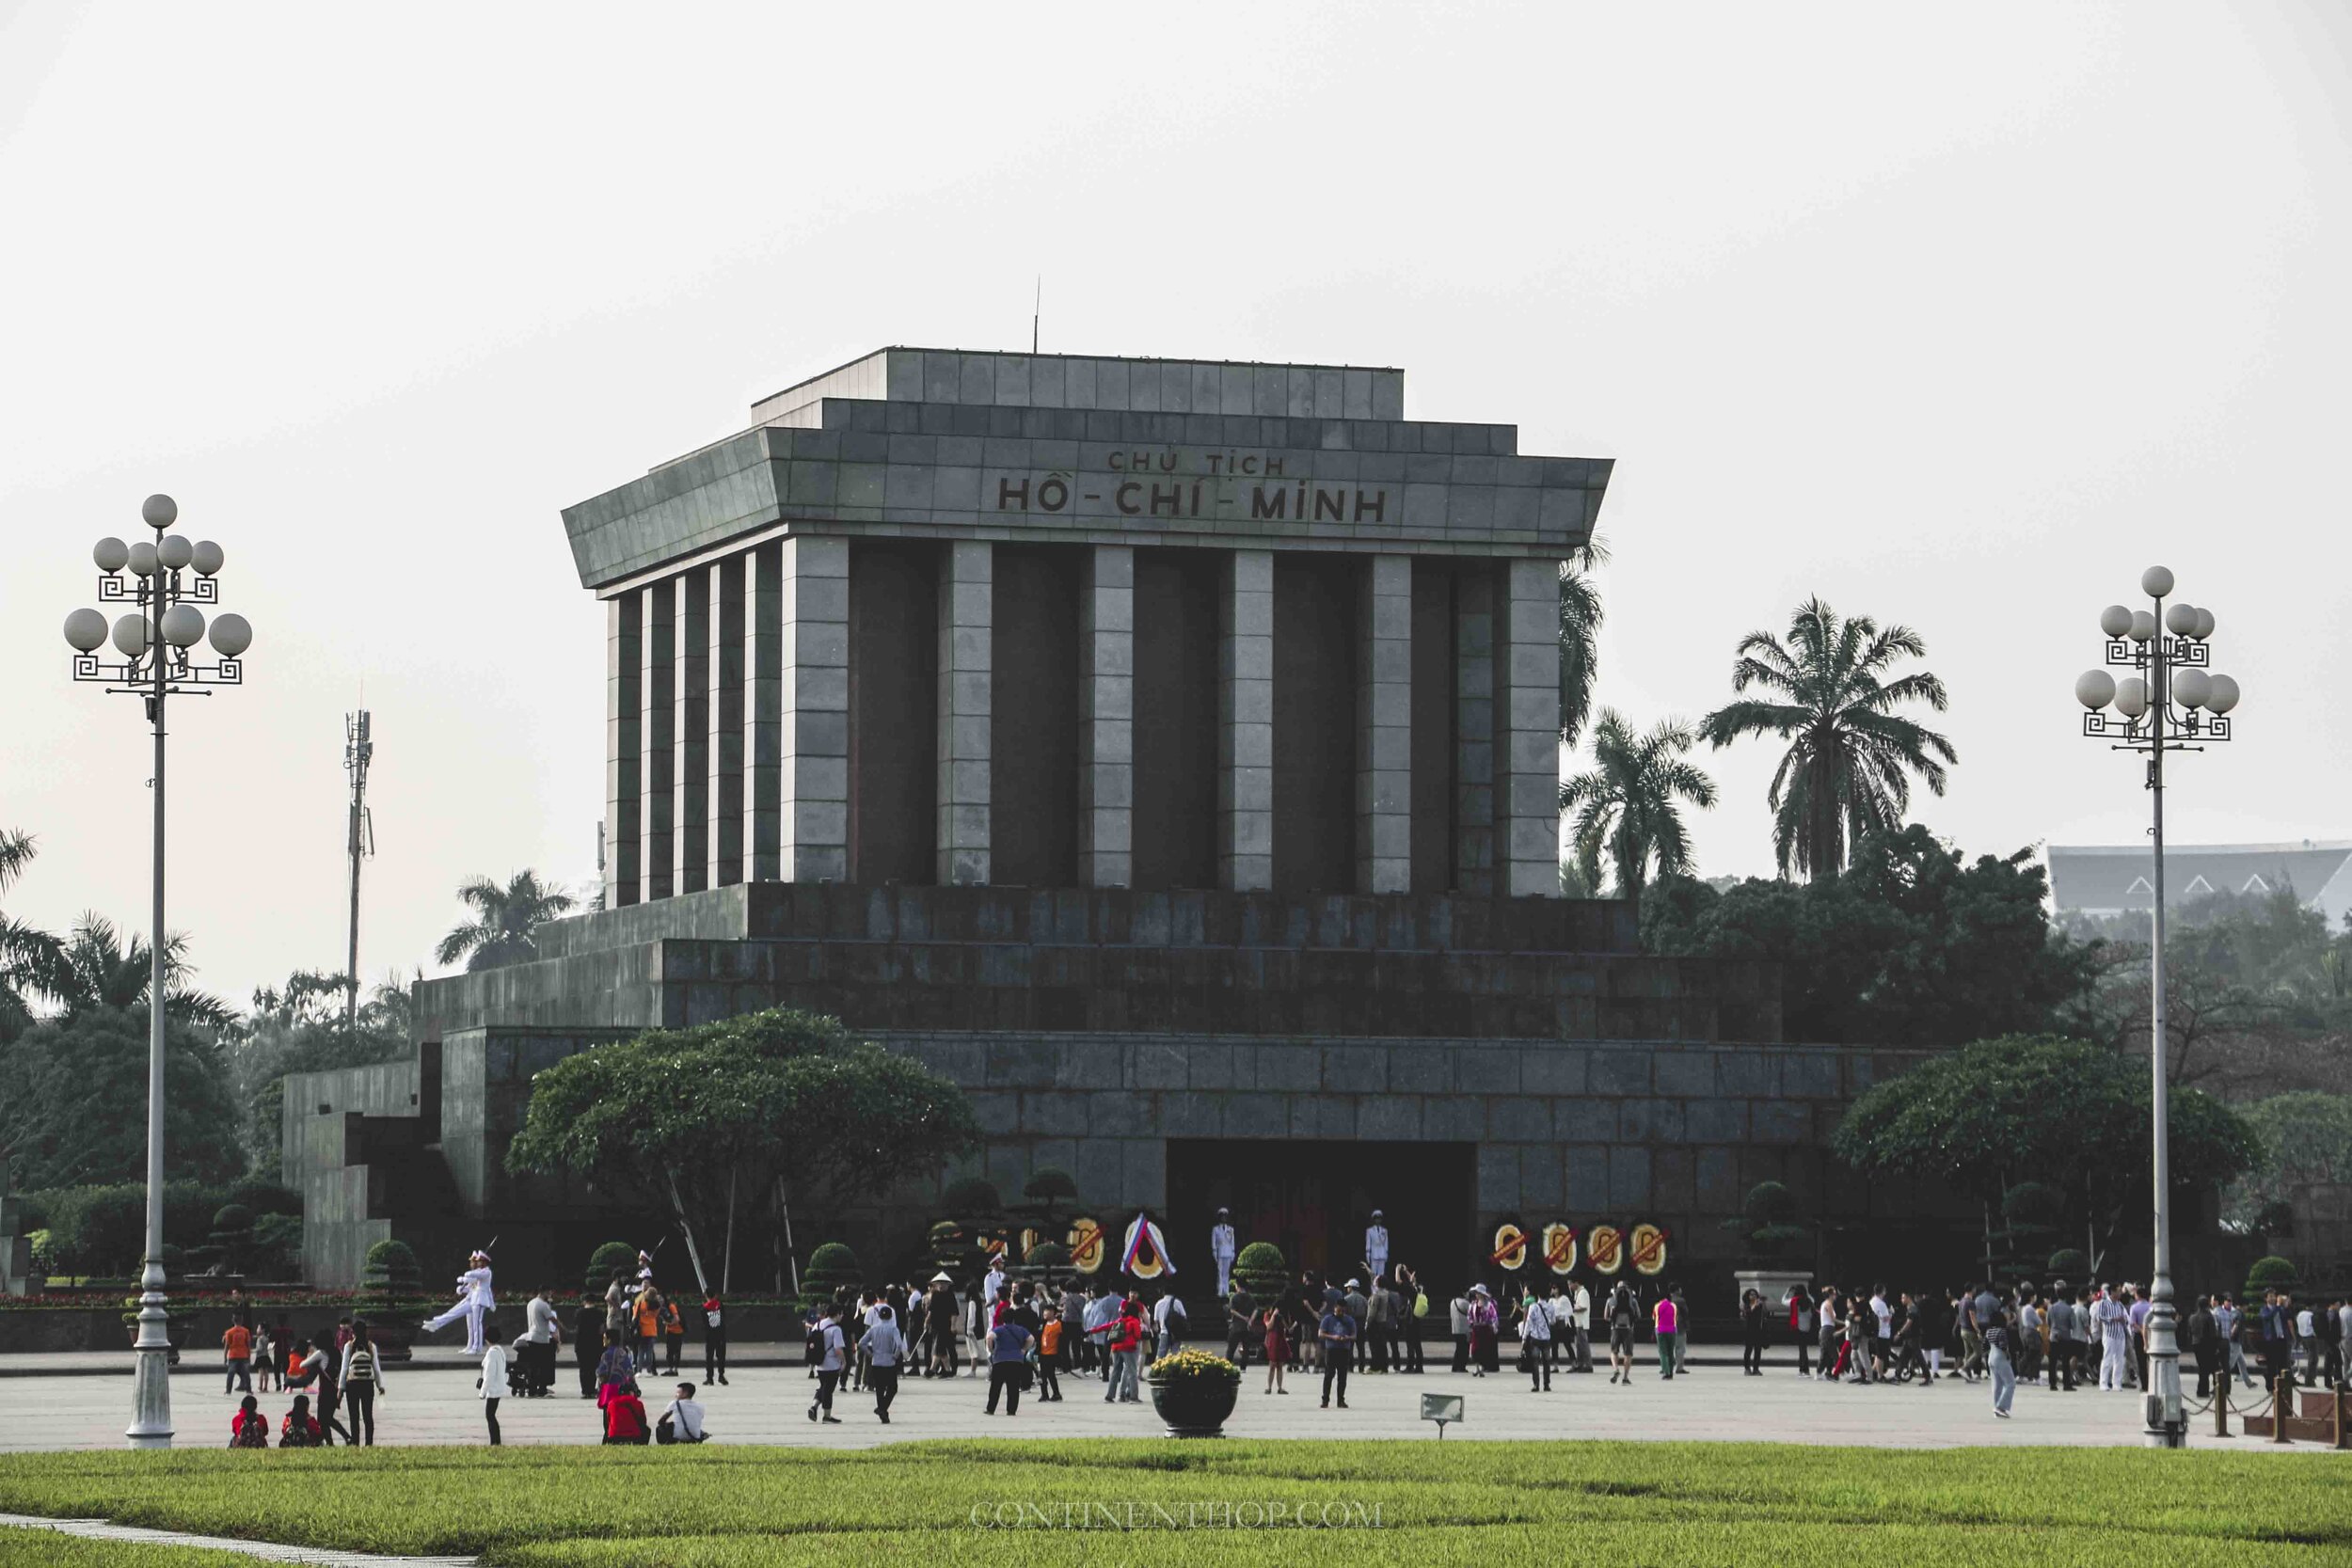 Image of the Ho Chi Minh Mausoleum in Hanoi Vietnam